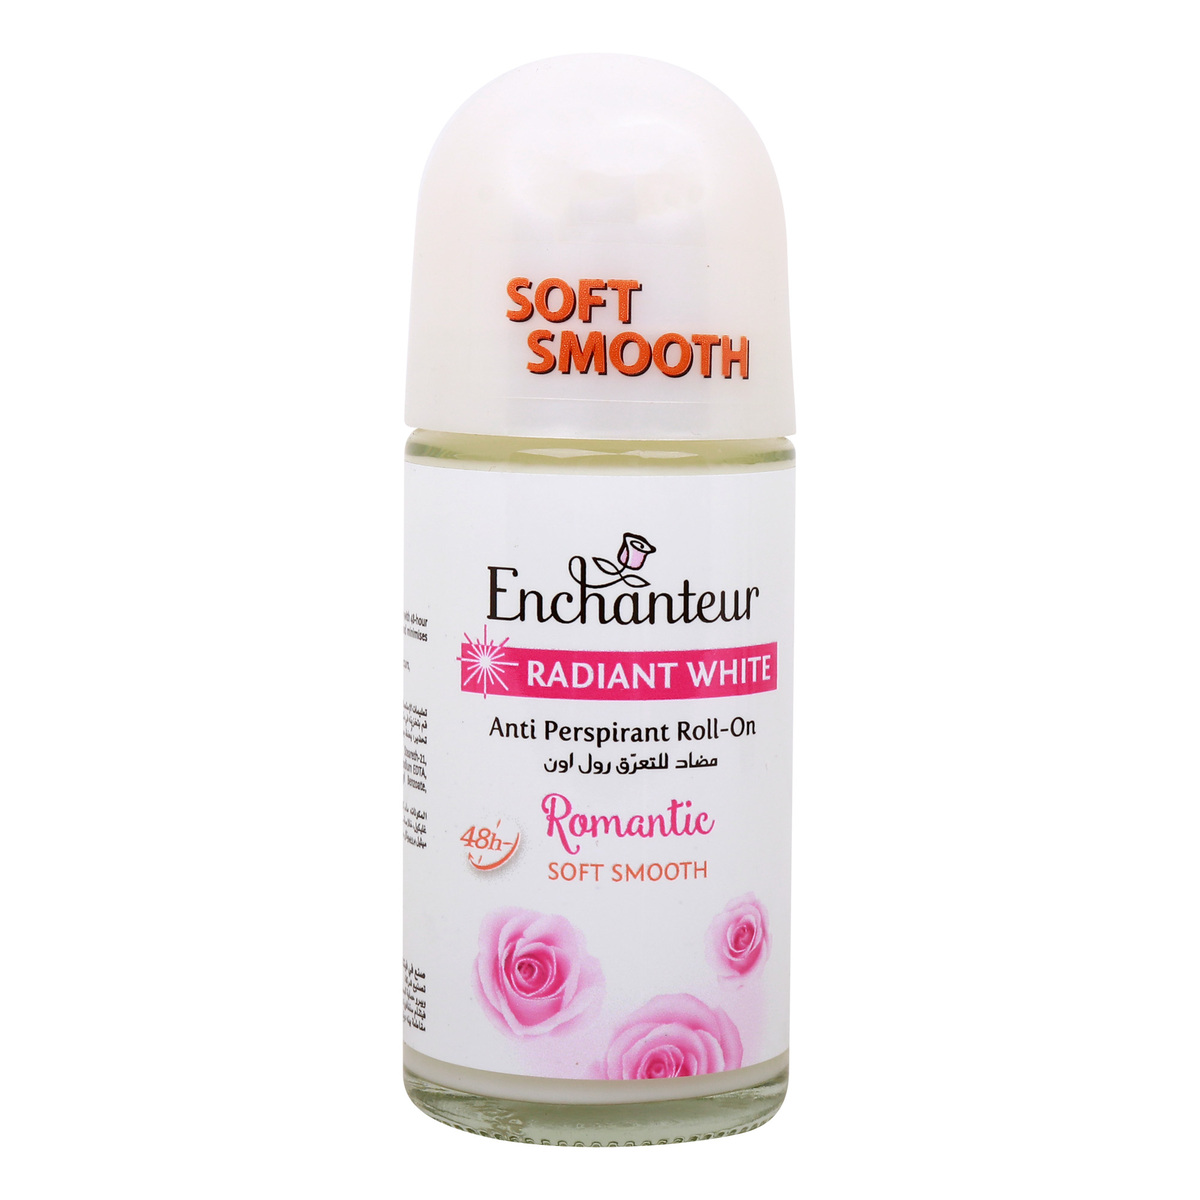 Enchanteur Romantic Soft Smooth Anti-Perspirant Roll-On, 50 ml